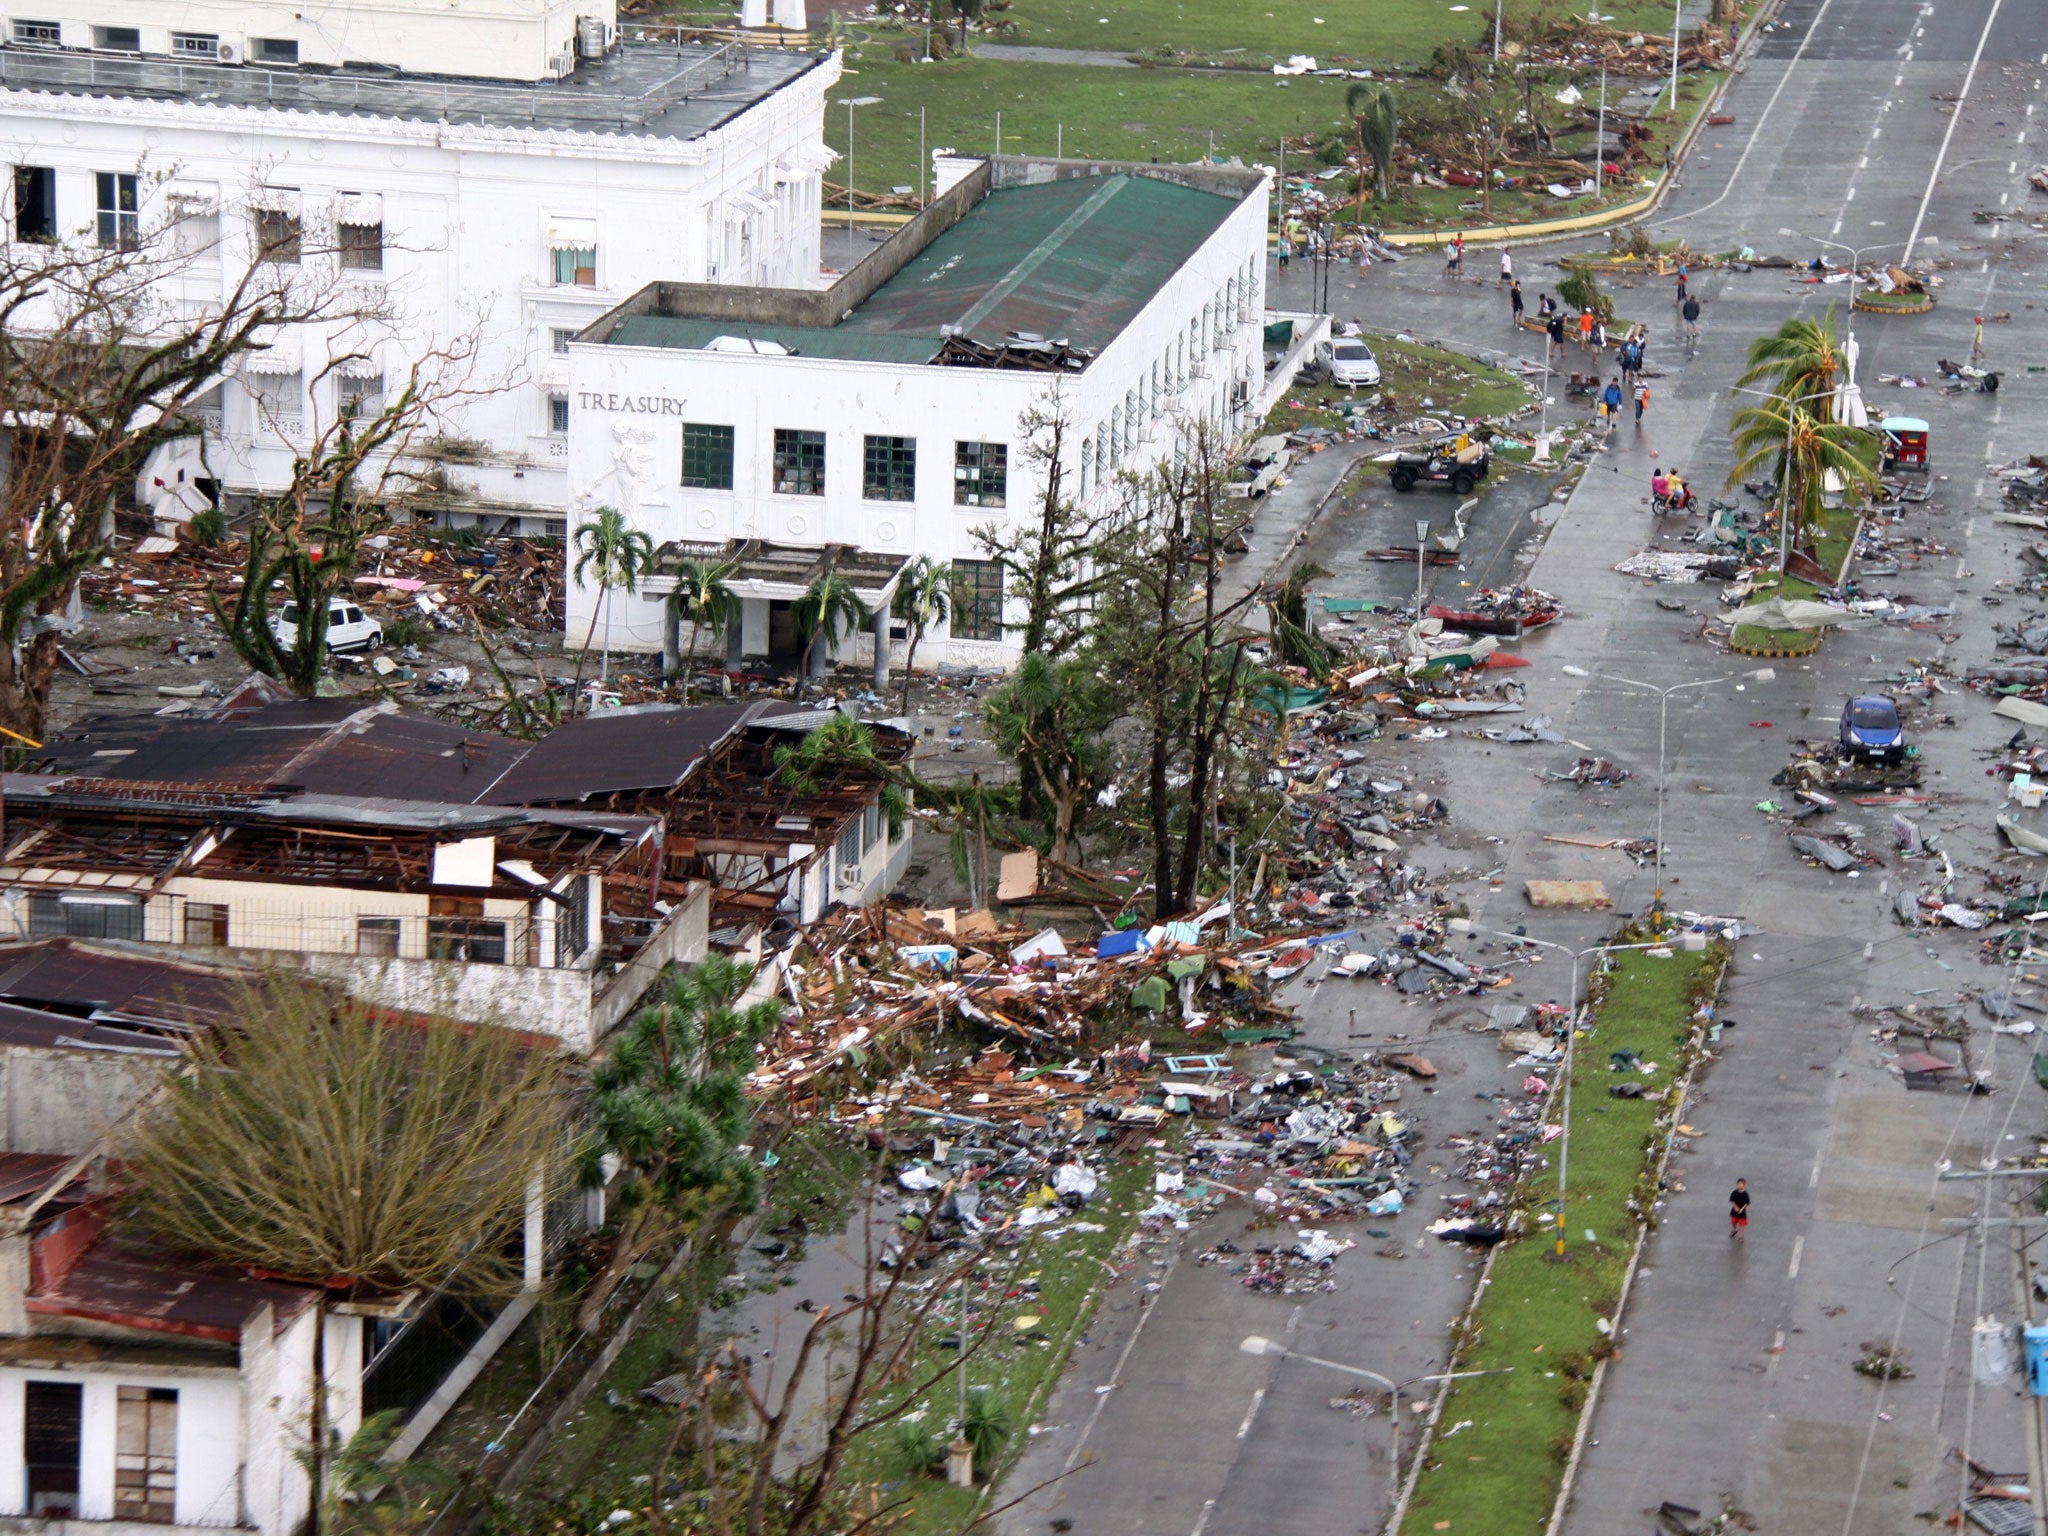 The aftermath of Typhoon Haiyan in Tacloban